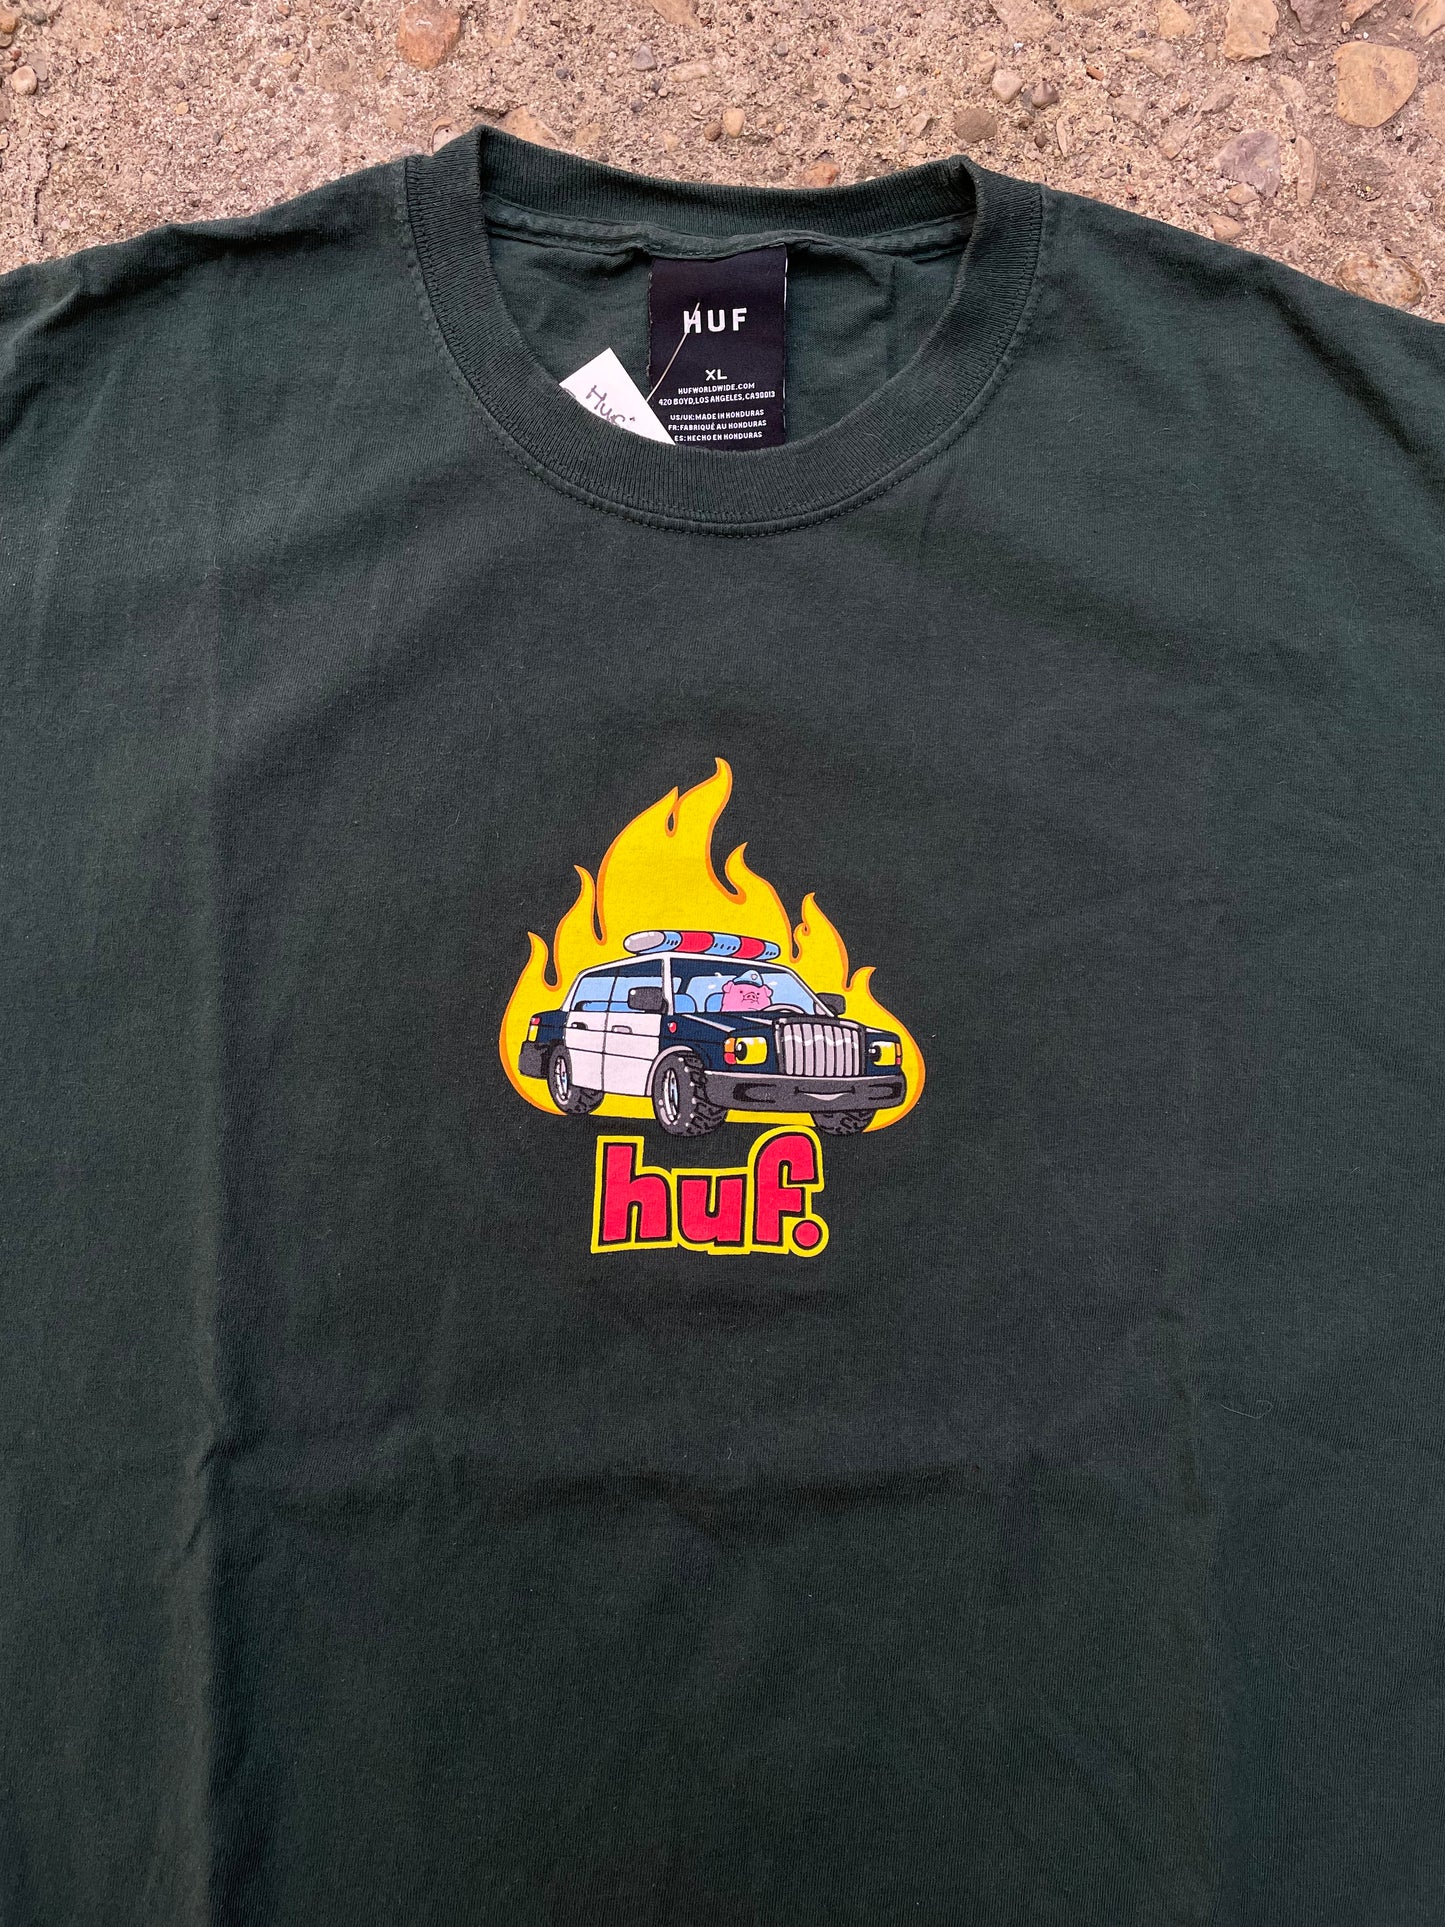 Huf Skateboards Flaming Police Car T-Shirt - XL